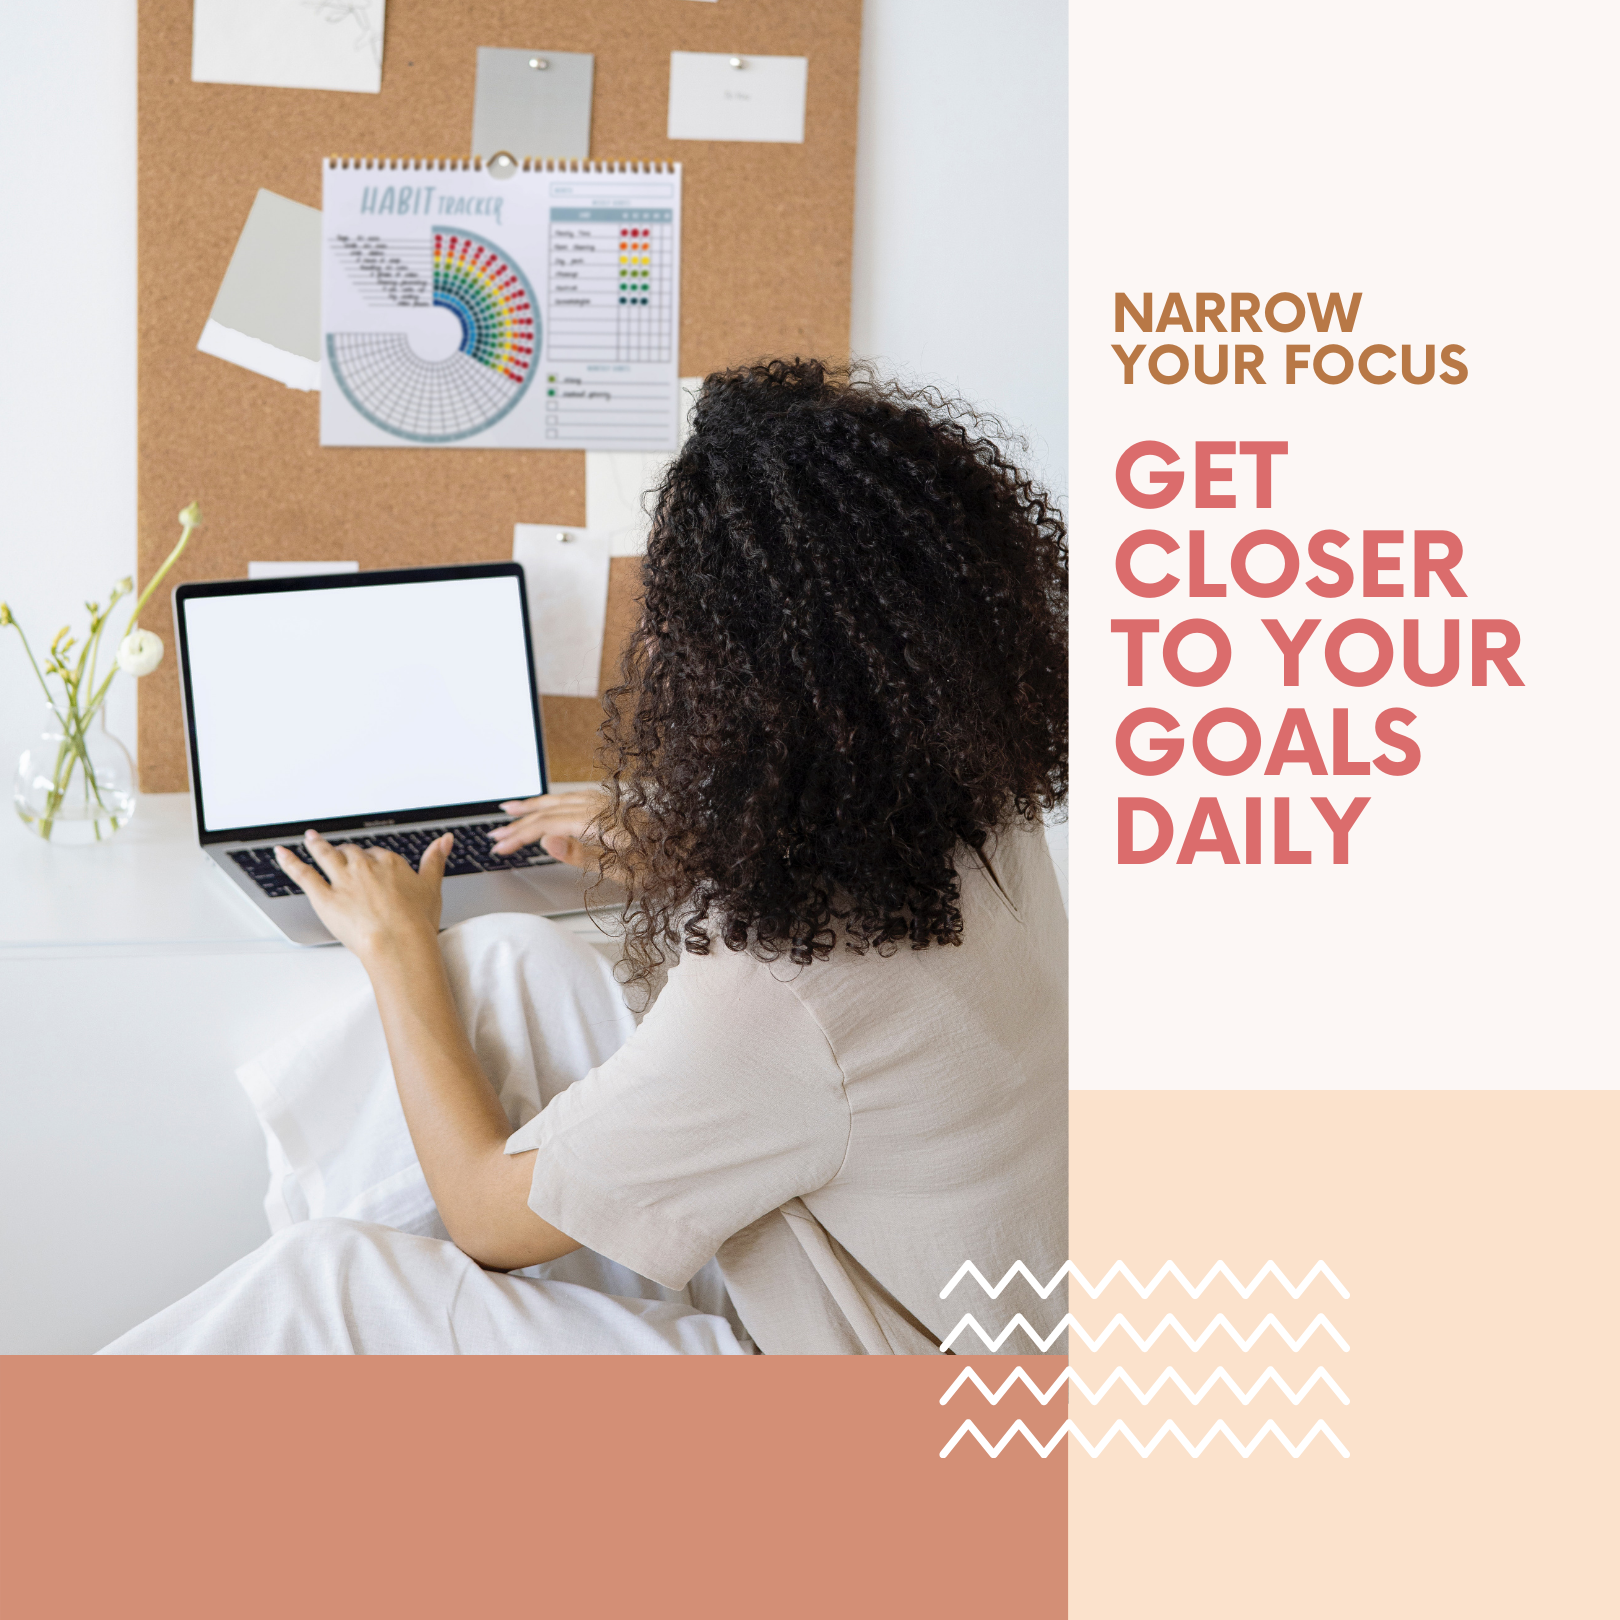 Habit Tracker Journal Goal Planner - Track Progress and Reach Goals Wi